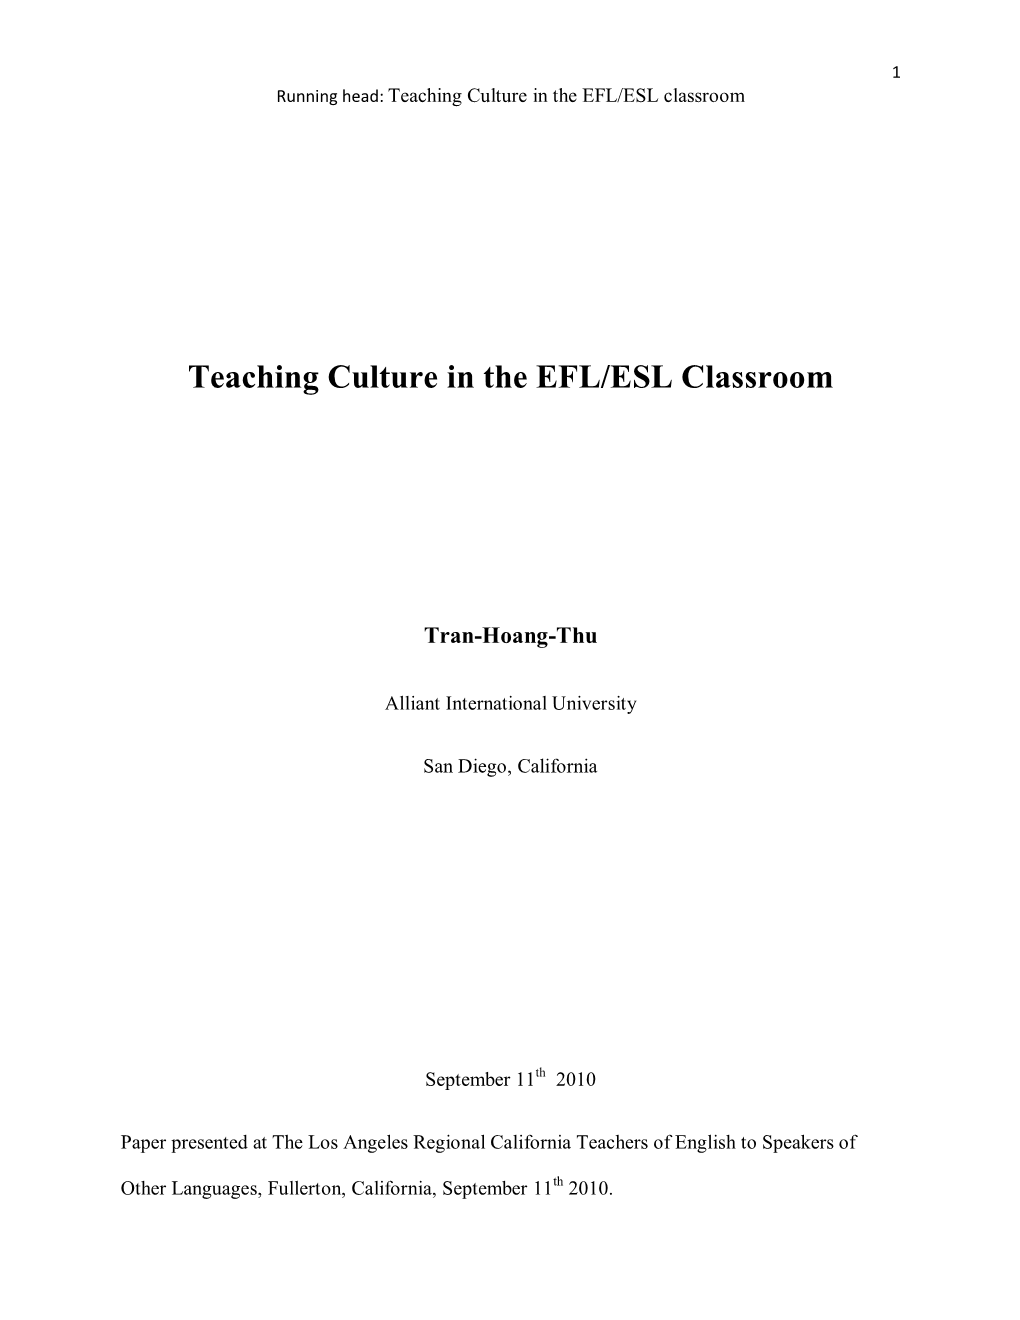 Teaching Culture in the EFL/ESL Classroom